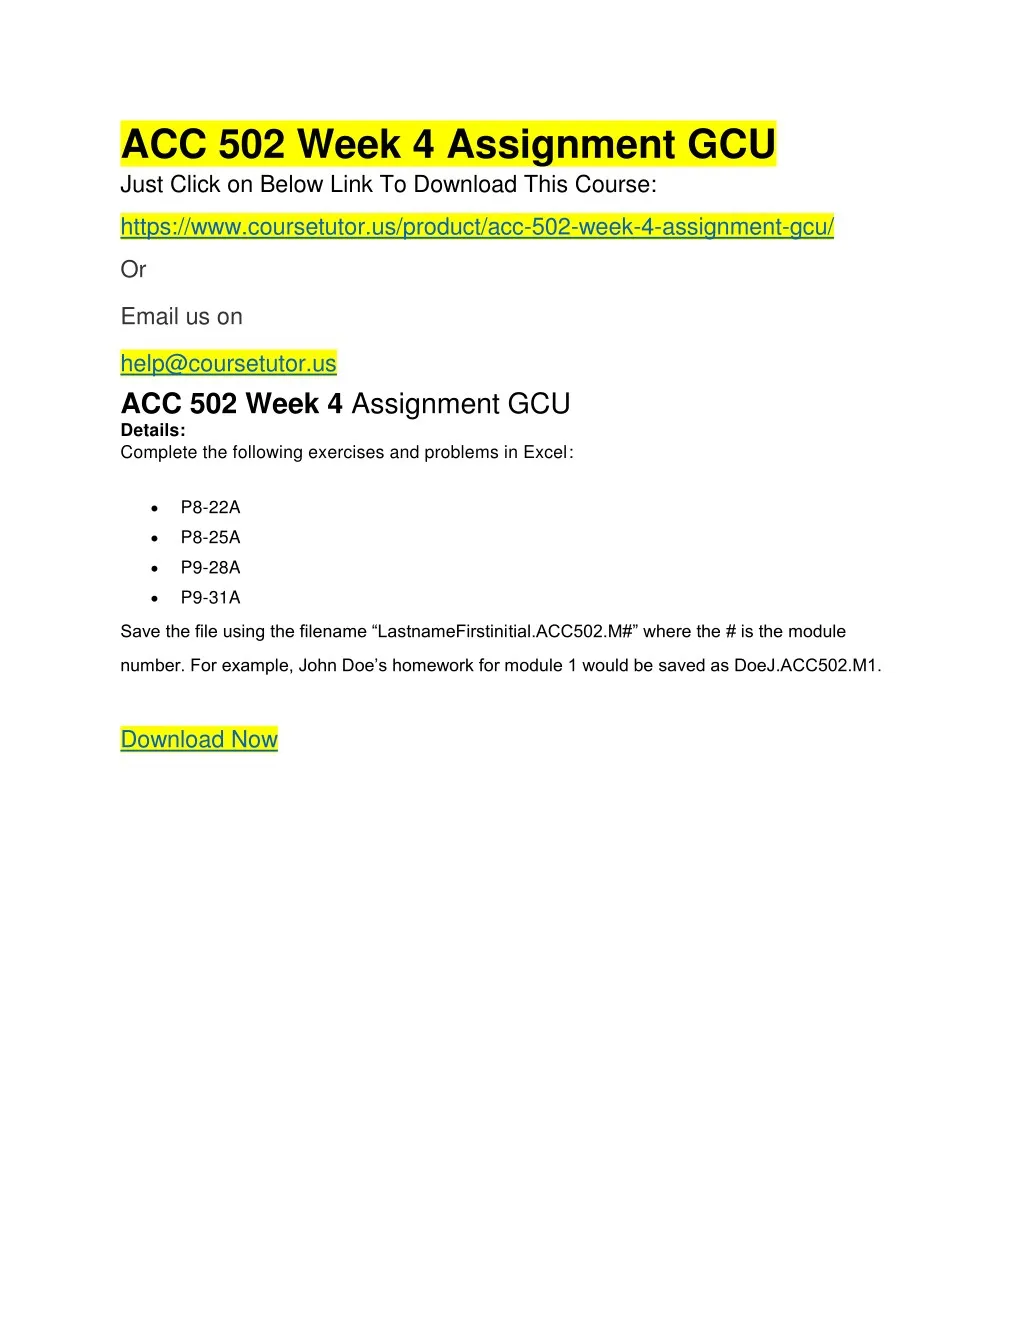 acc 502 week 4 assignment gcu just click on below